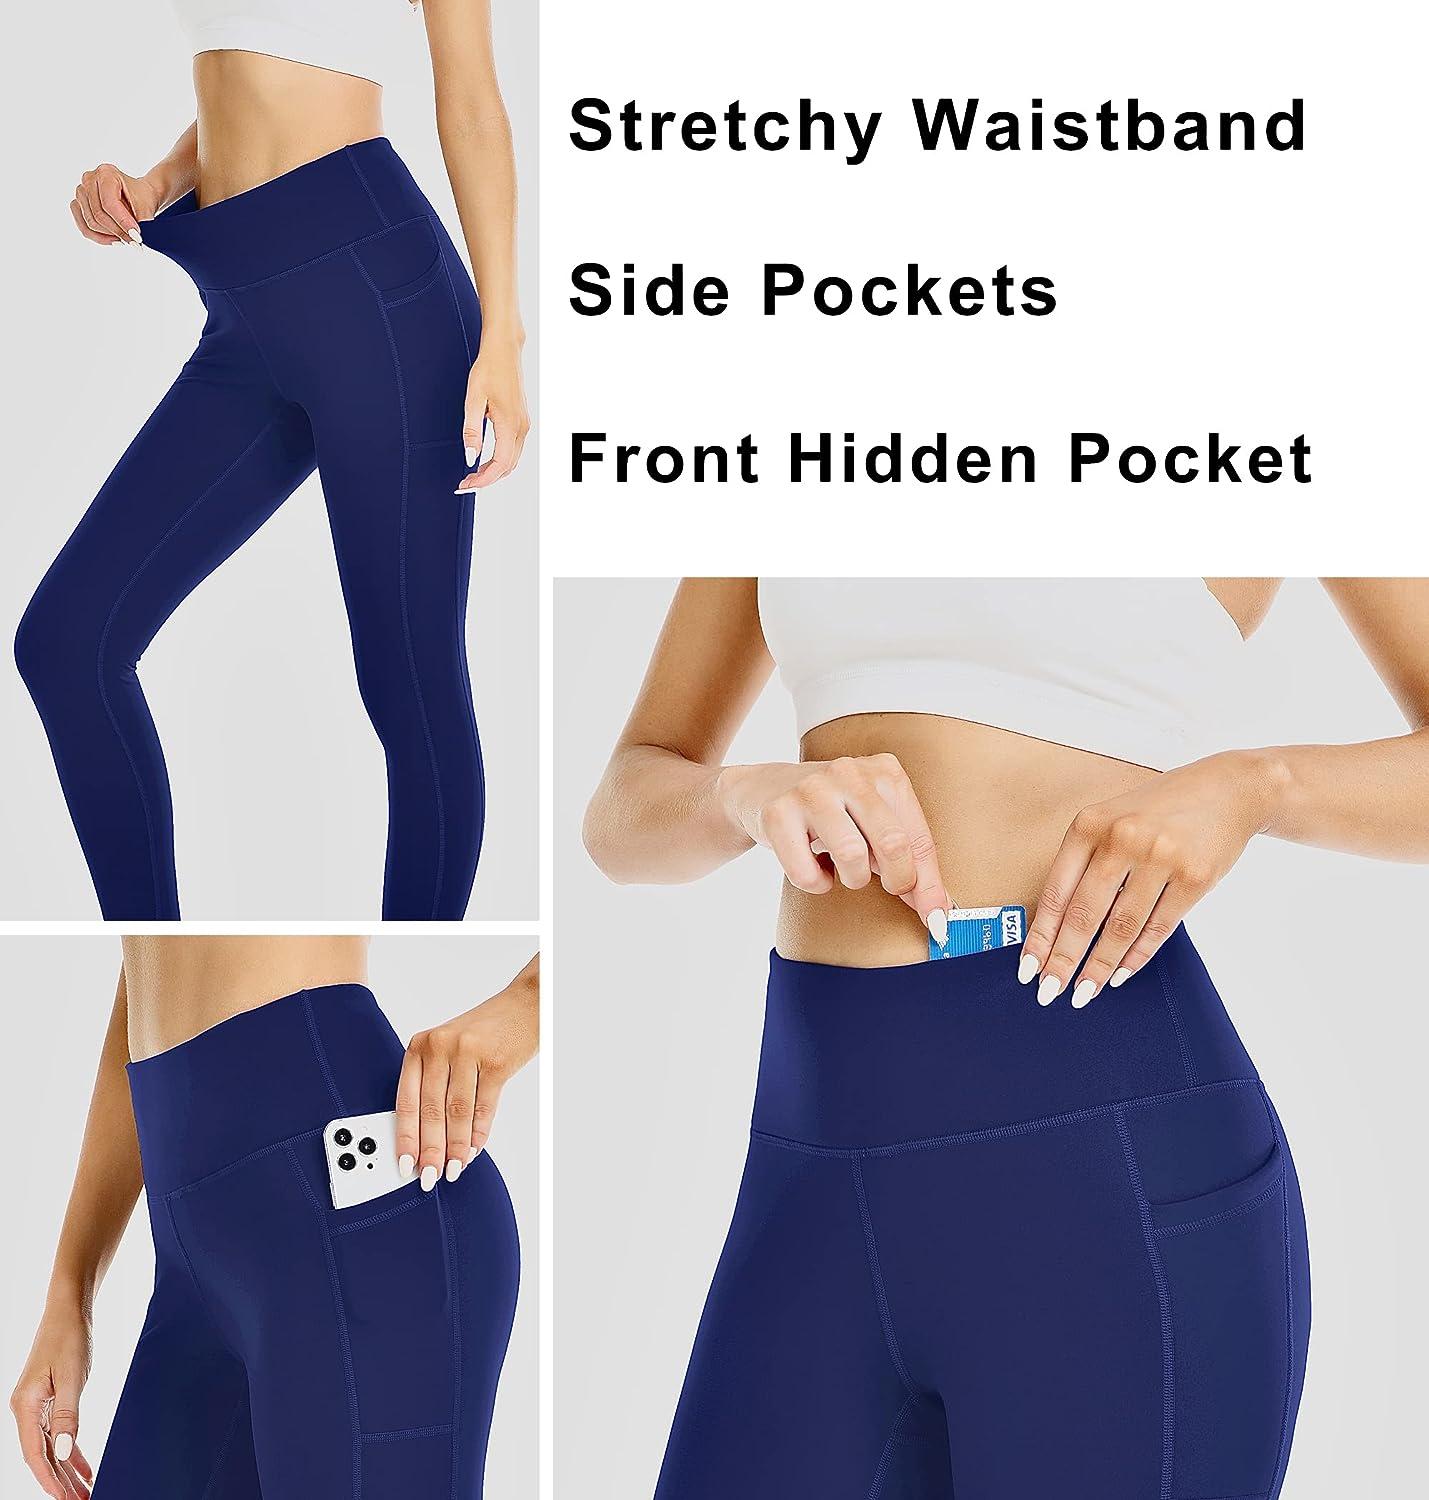 Women's High Waist Squat Proof Yoga Leggings w/ 3 Pockets